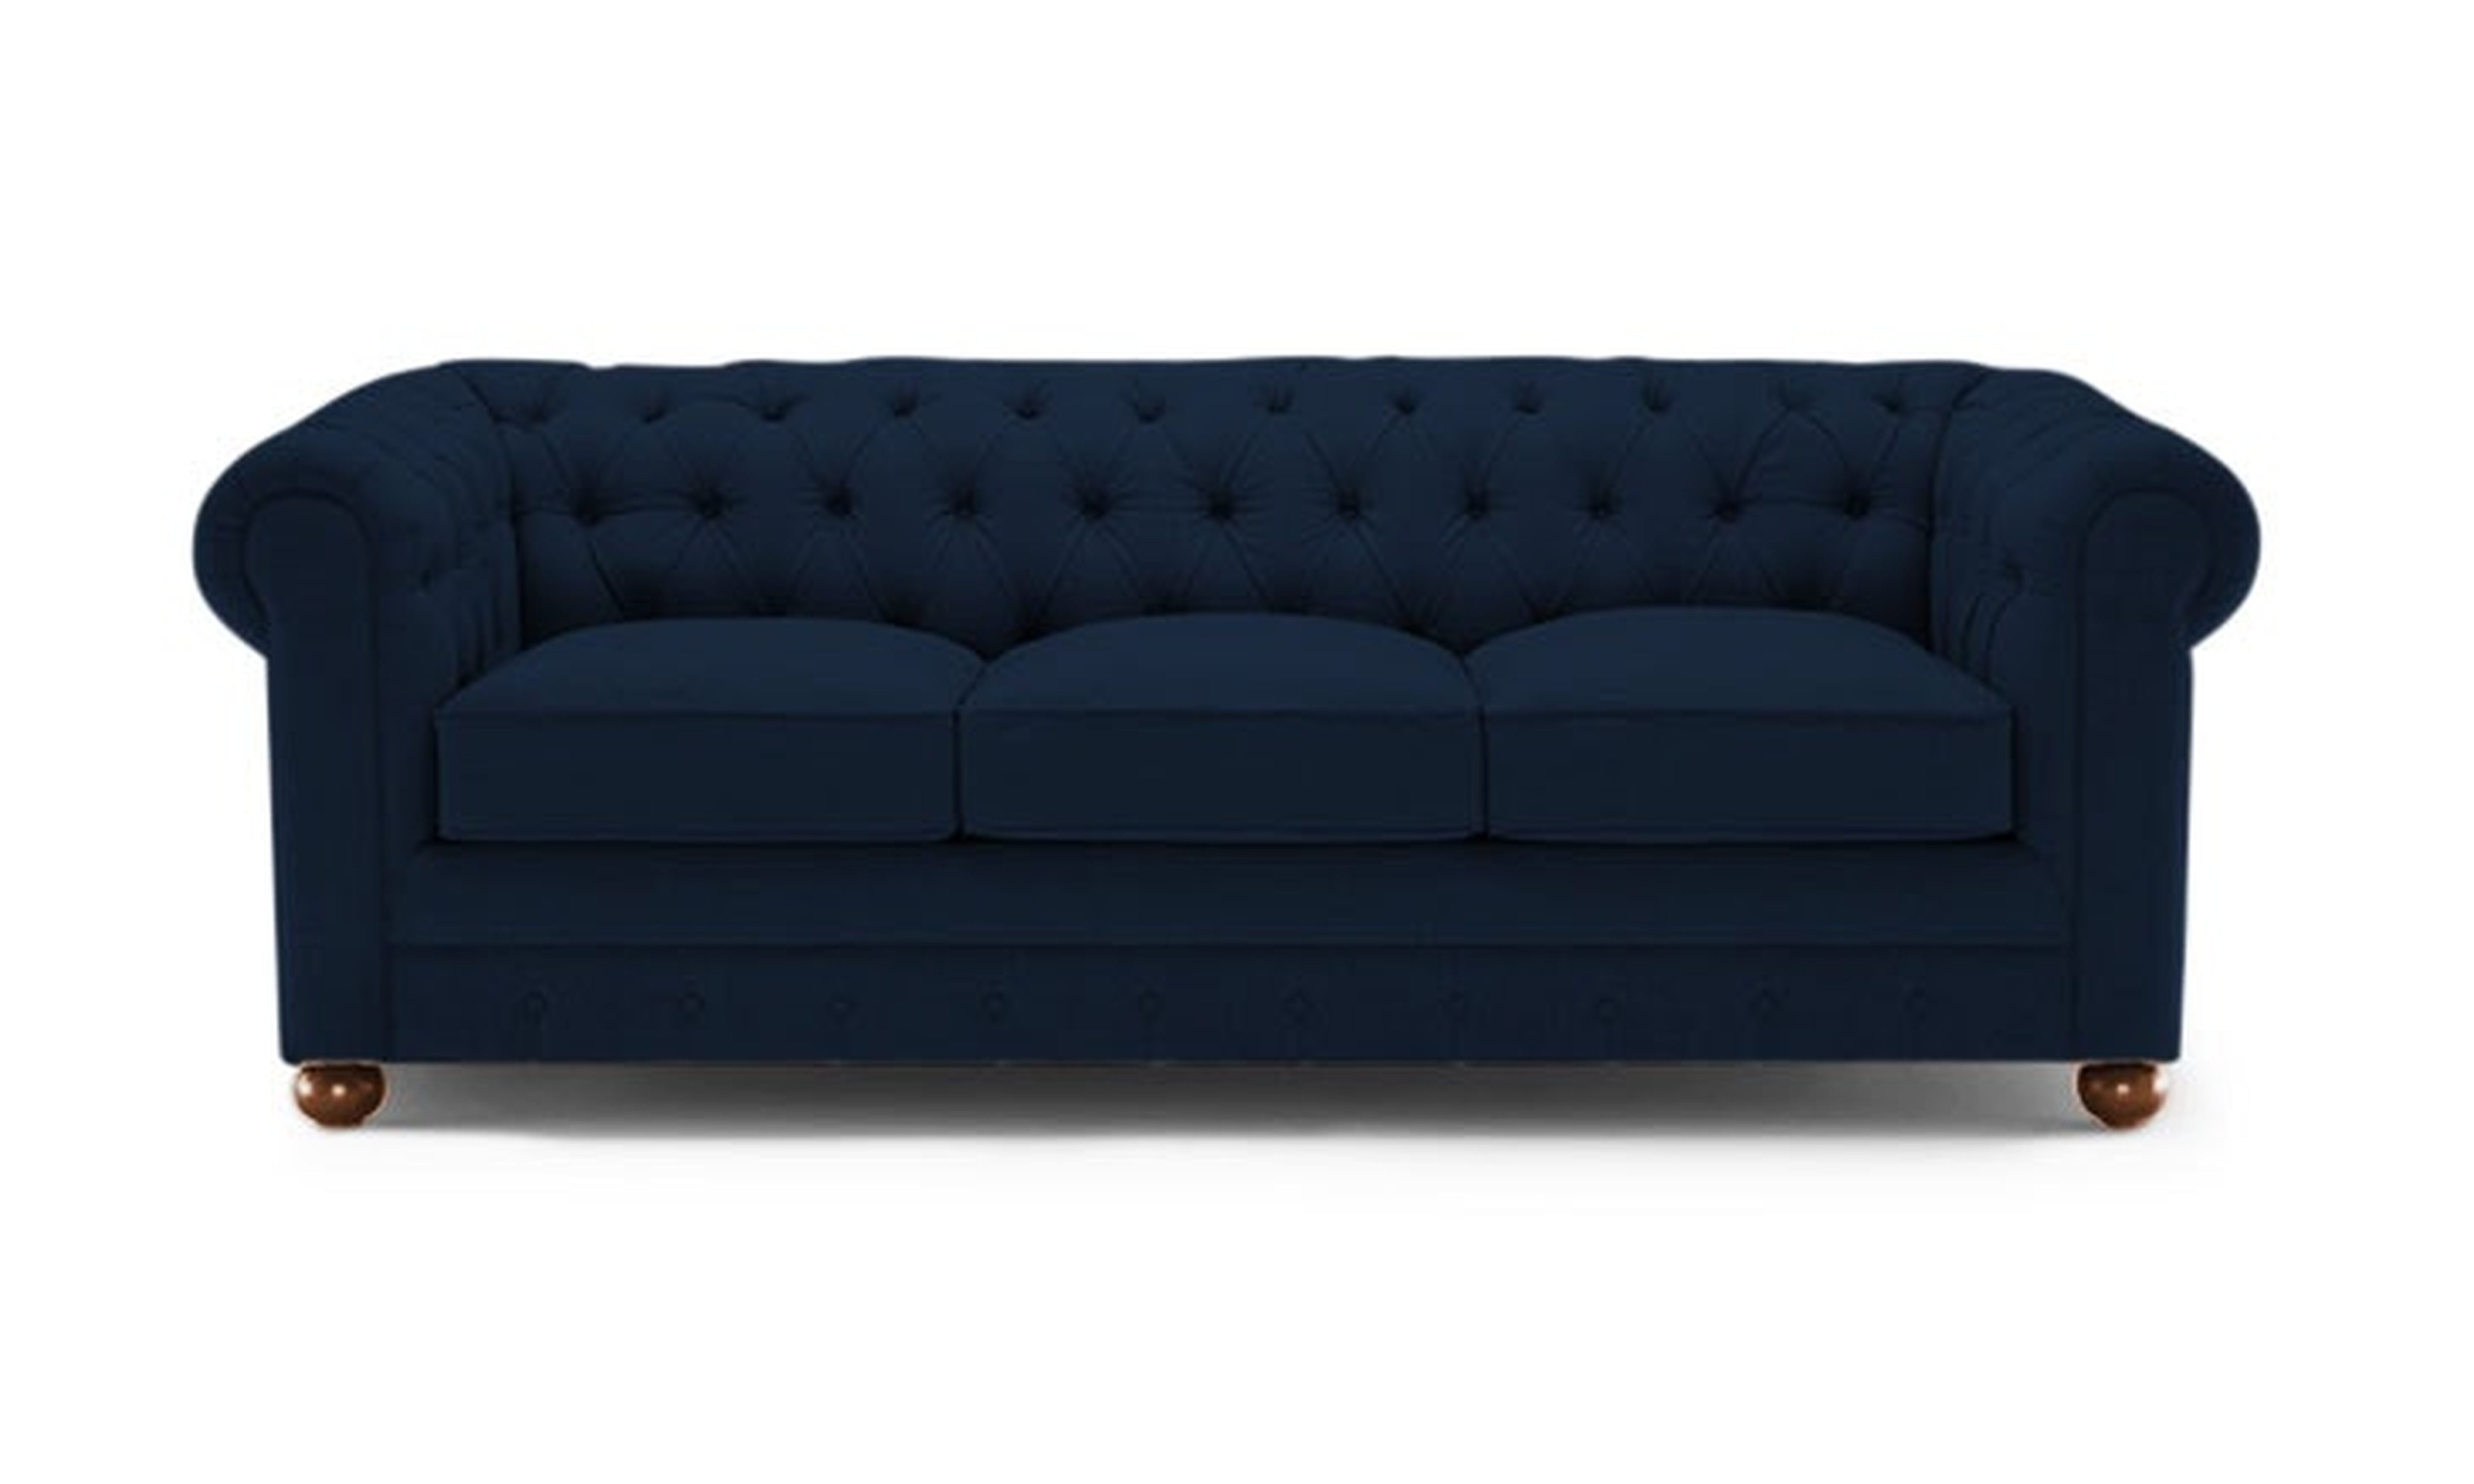 Blue Liam Mid Century Modern Sleeper Sofa - Royale Cobalt - Medium - Joybird